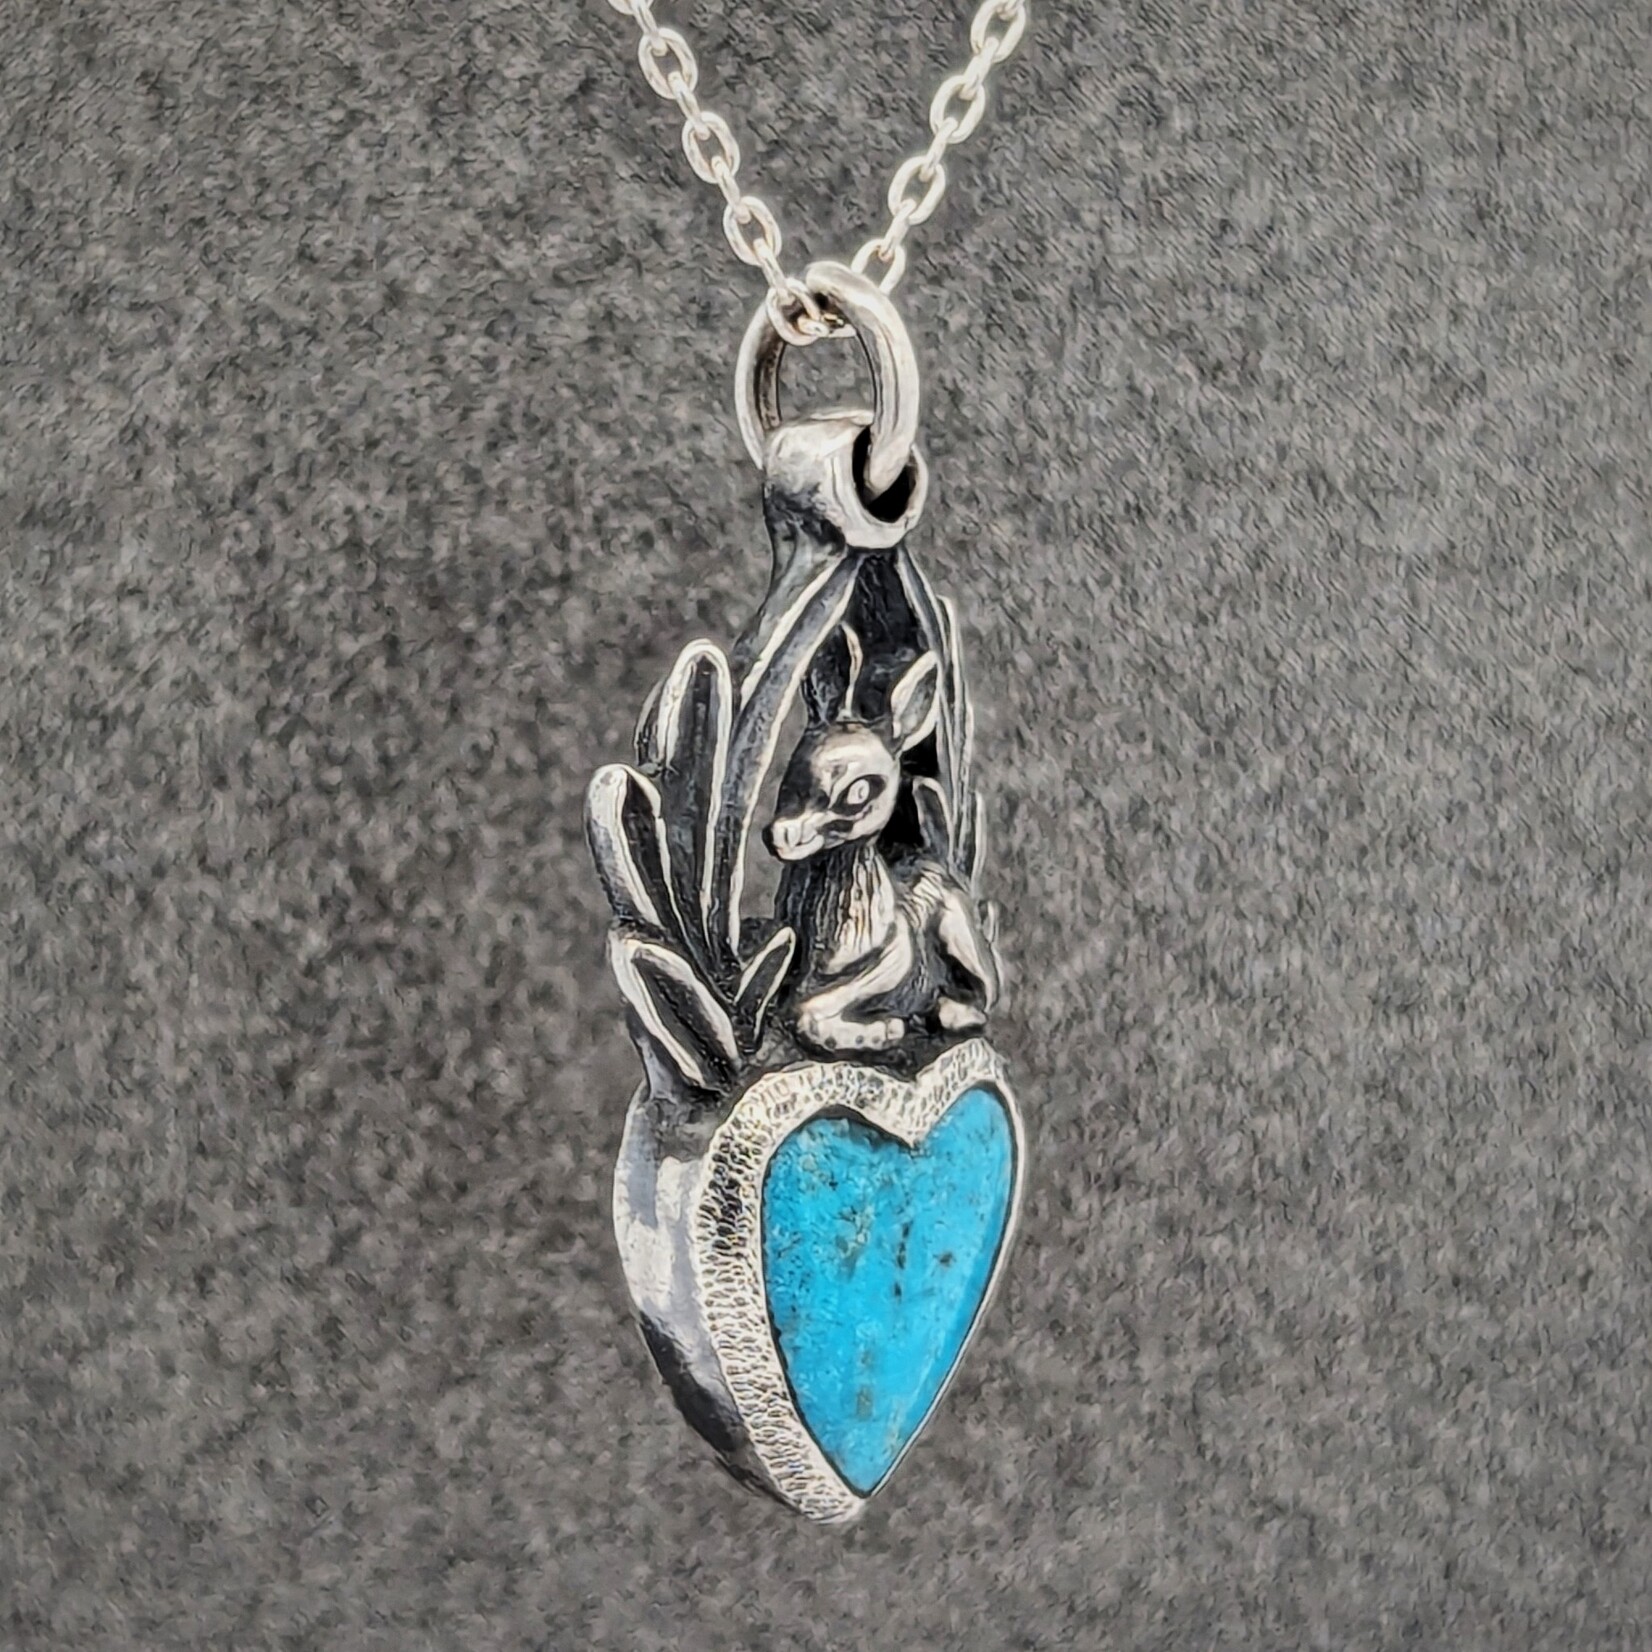 Carrie Nunes Jewelry Baby Deer Heart Pendant w/ Turquoise